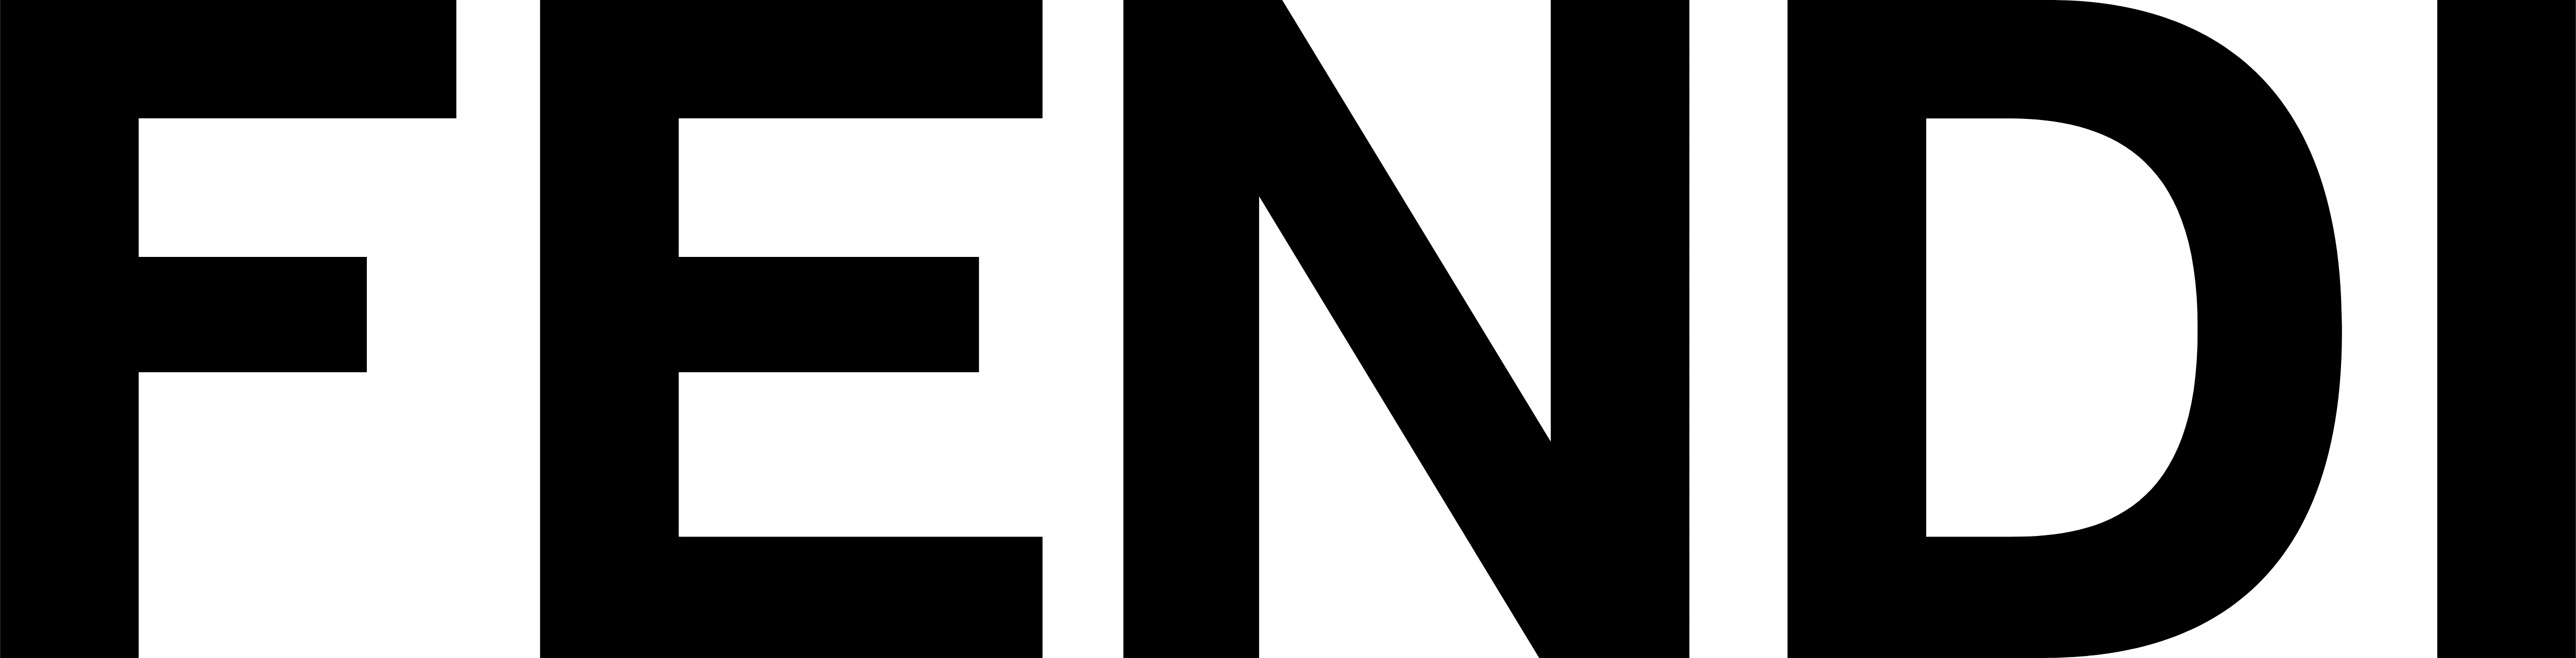 Fendi Logo - Fendi Watches – Logos Download